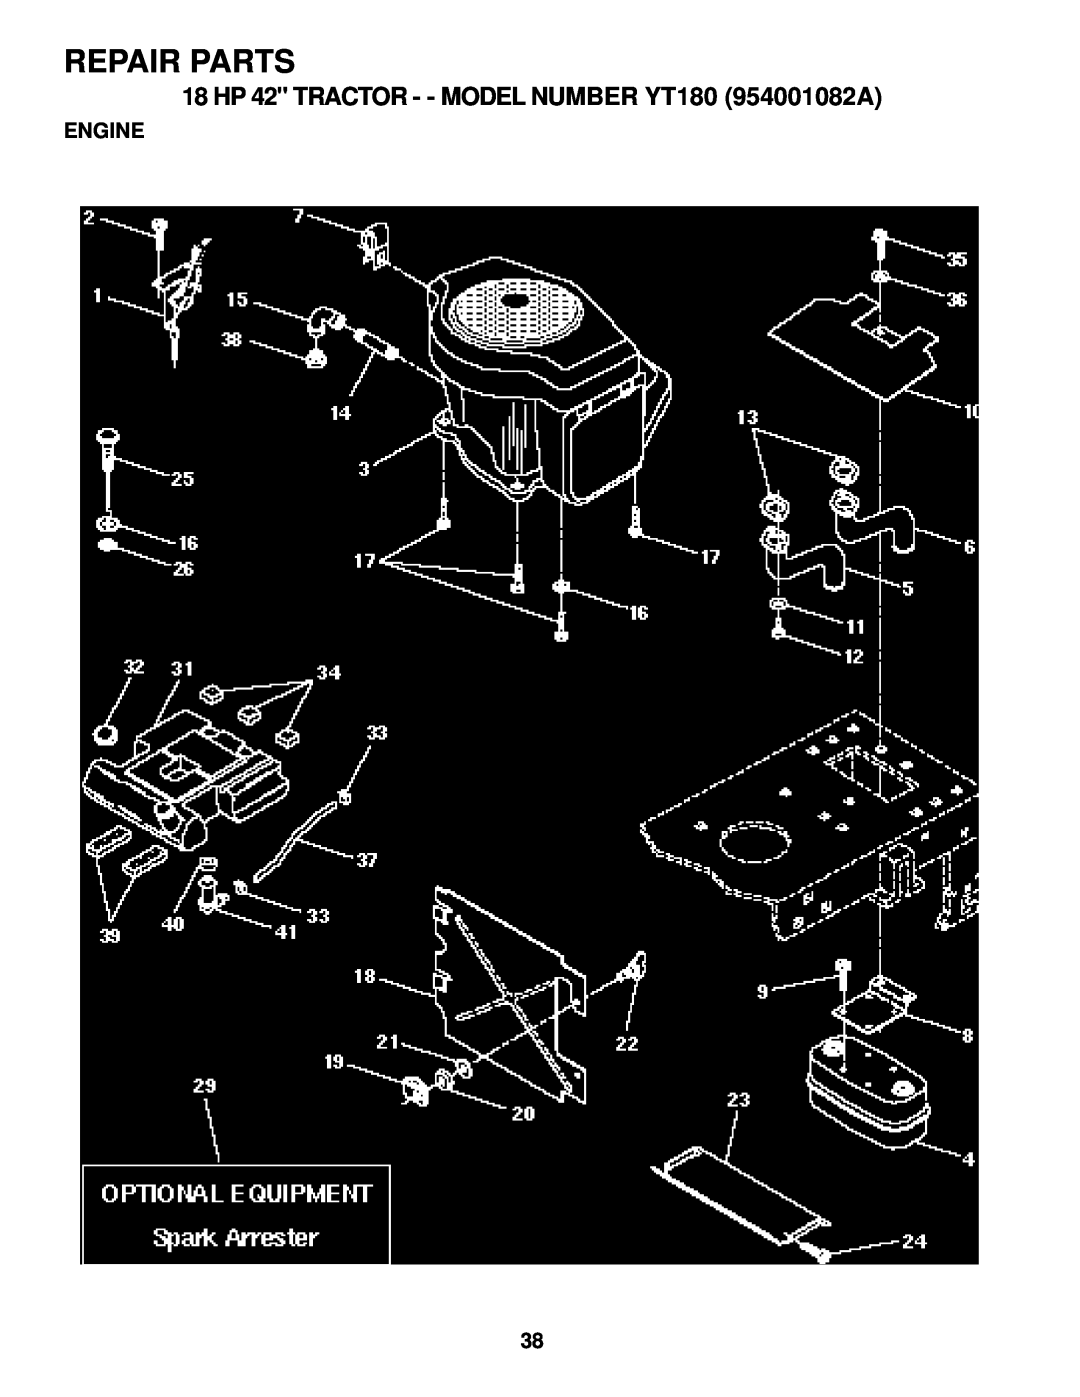 Husqvarna owner manual Engine, Repair Parts, 18 HP 42 TRACTOR - - MODEL NUMBER YT180 954001082A 